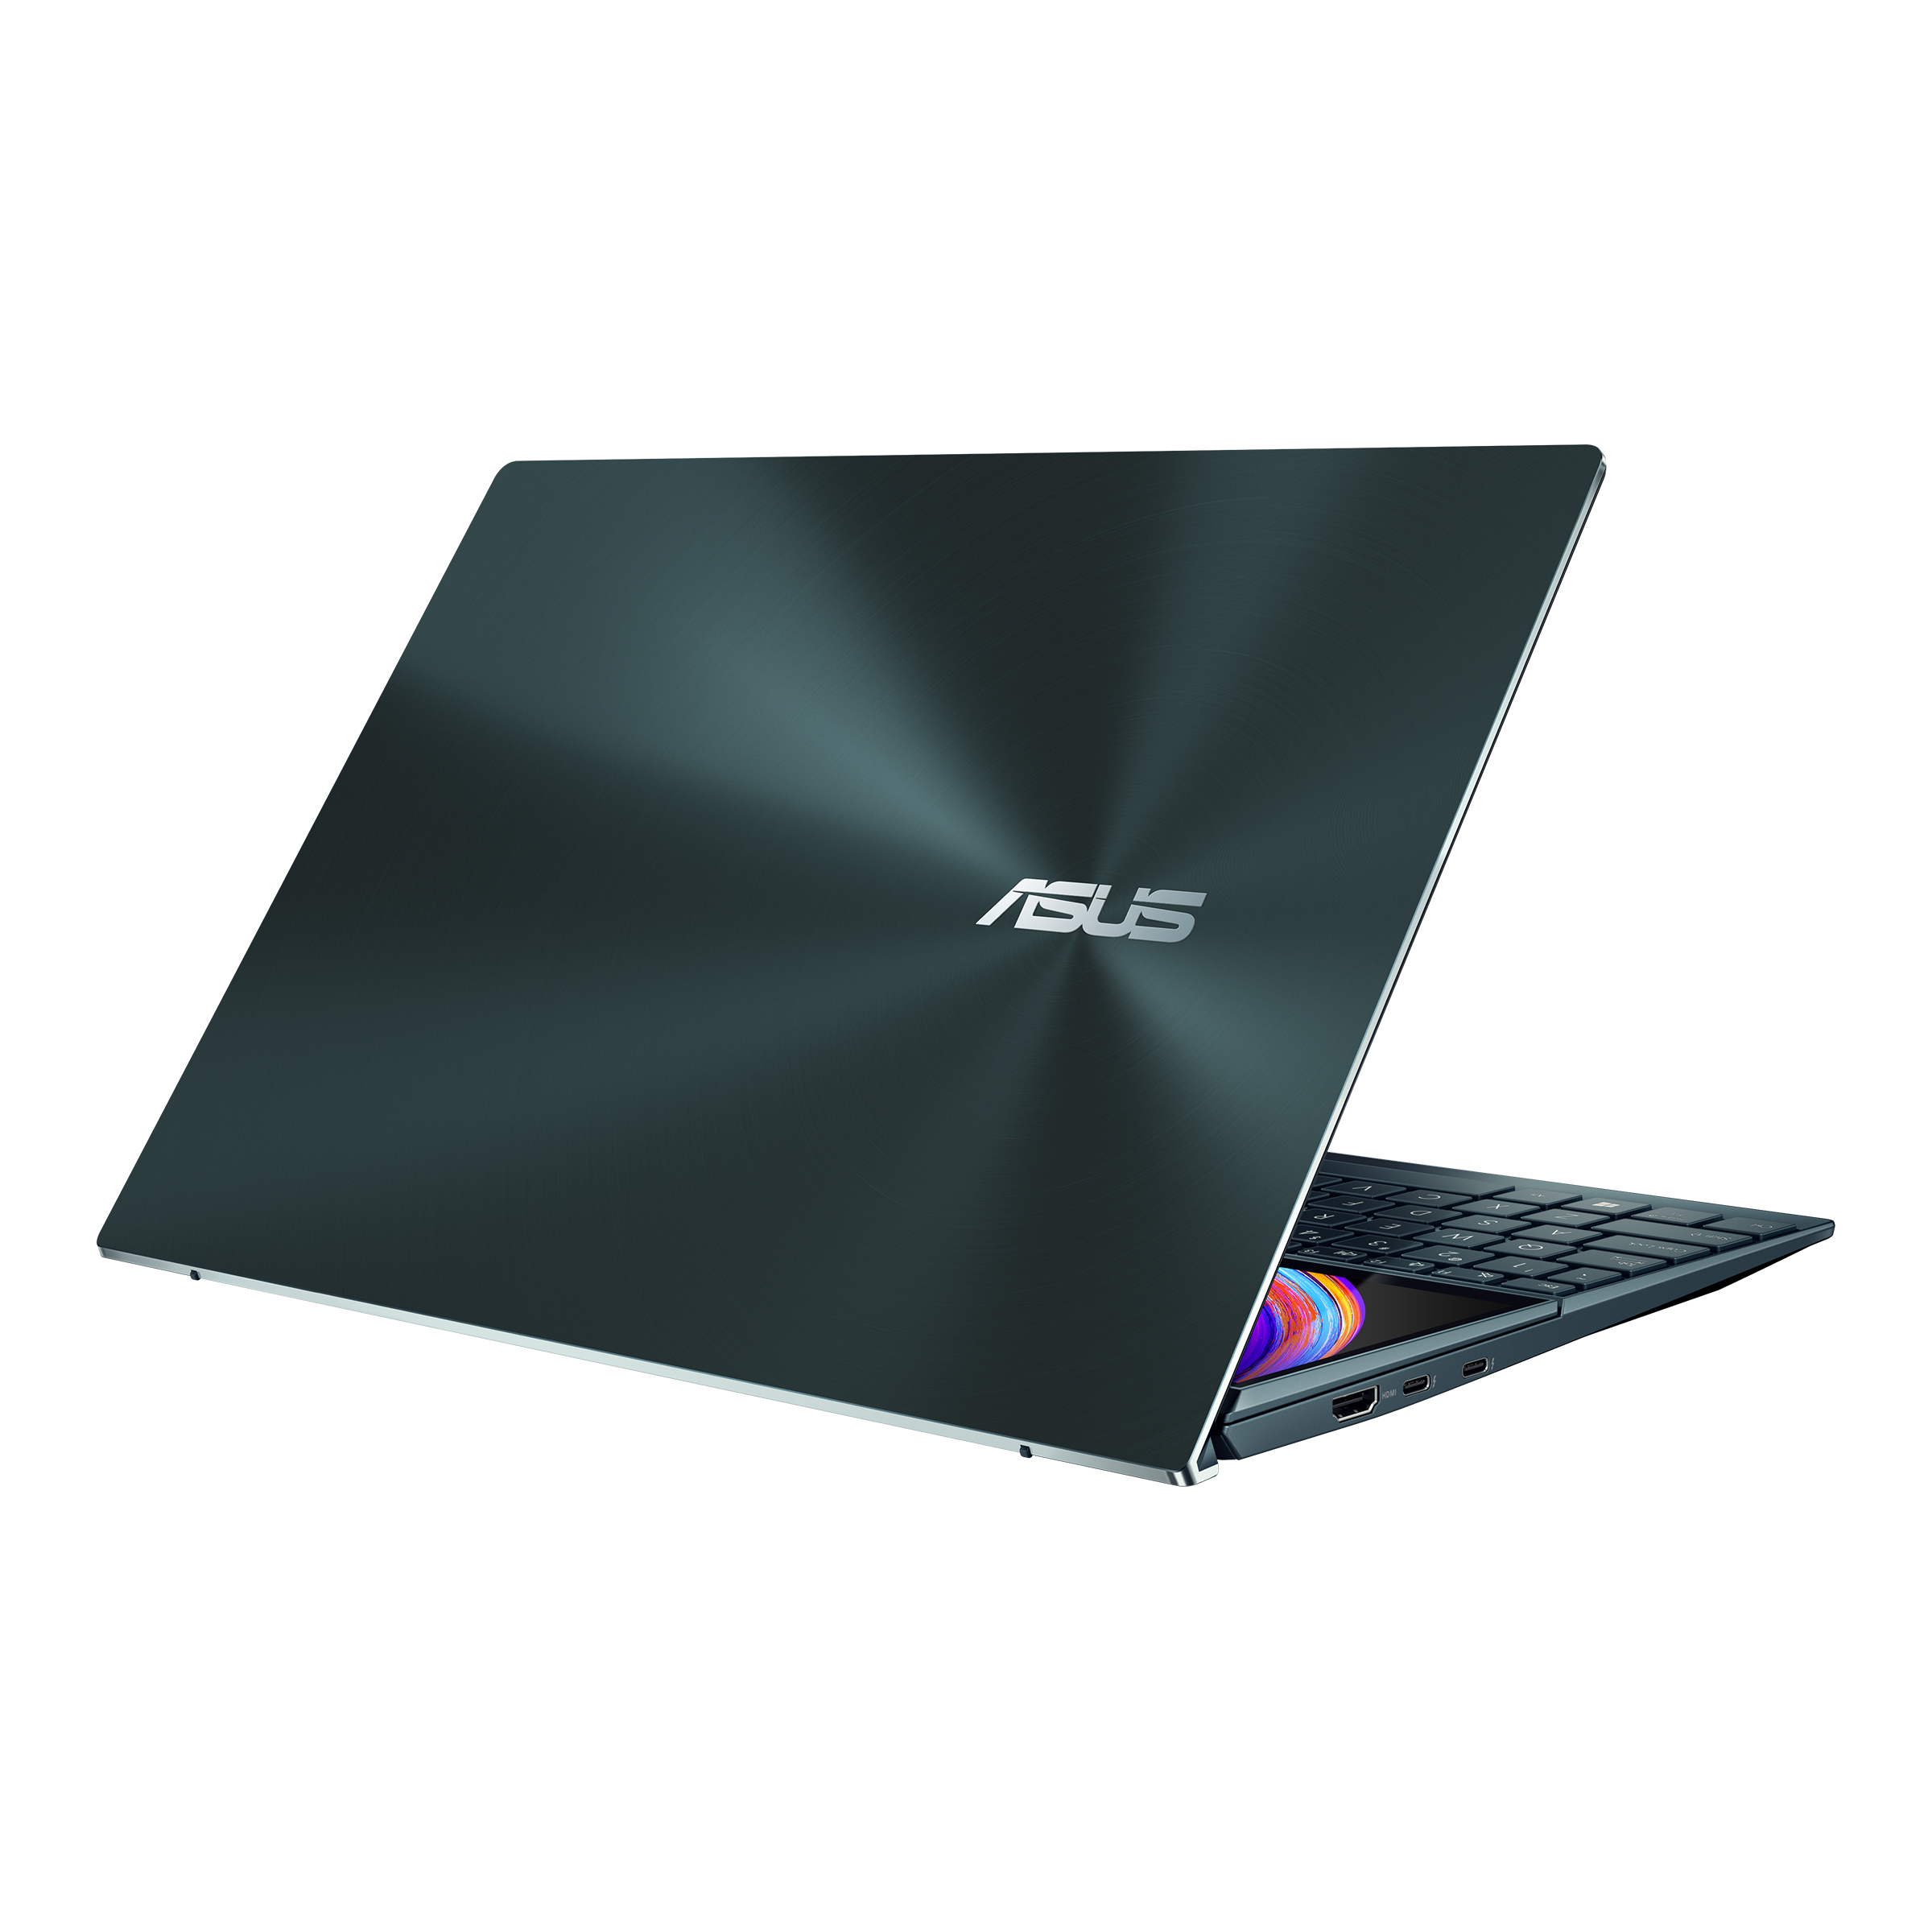 ASUS ZenBook Duo 14 UX482 14 FHD NanoEdge Touch Display, Intel Evo  Platform, Core i7-1195G7, 8GB RAM, 512GB PCIe SSD, Innovative ScreenPad  Plus, Windows 10 Home, Celestial Blue, UX482EAR-DB71T 